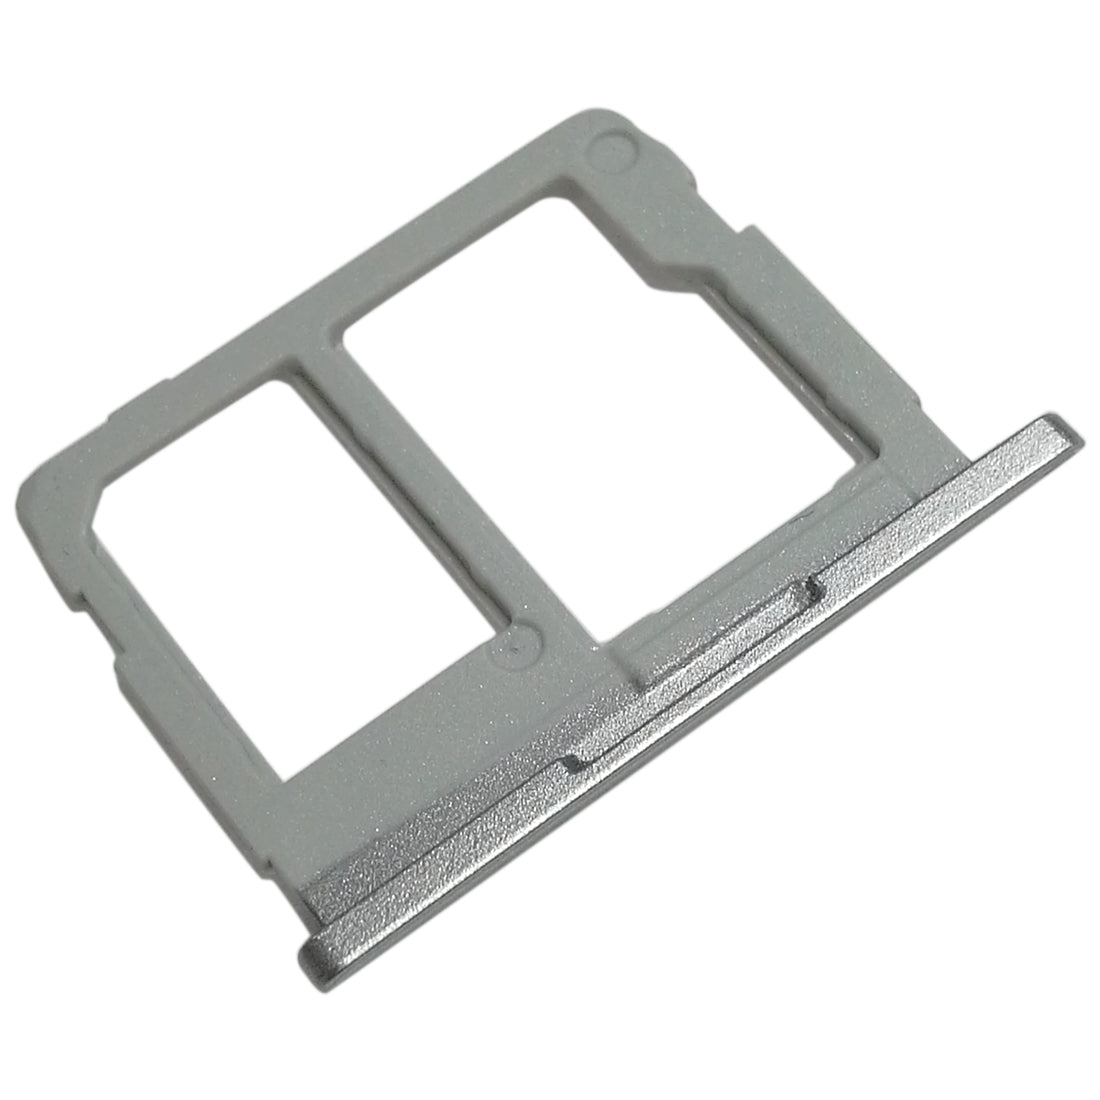 SIM / Micro SD Tray for Samsung Galaxy Tab A 8.0 / T380 / T385 Gray